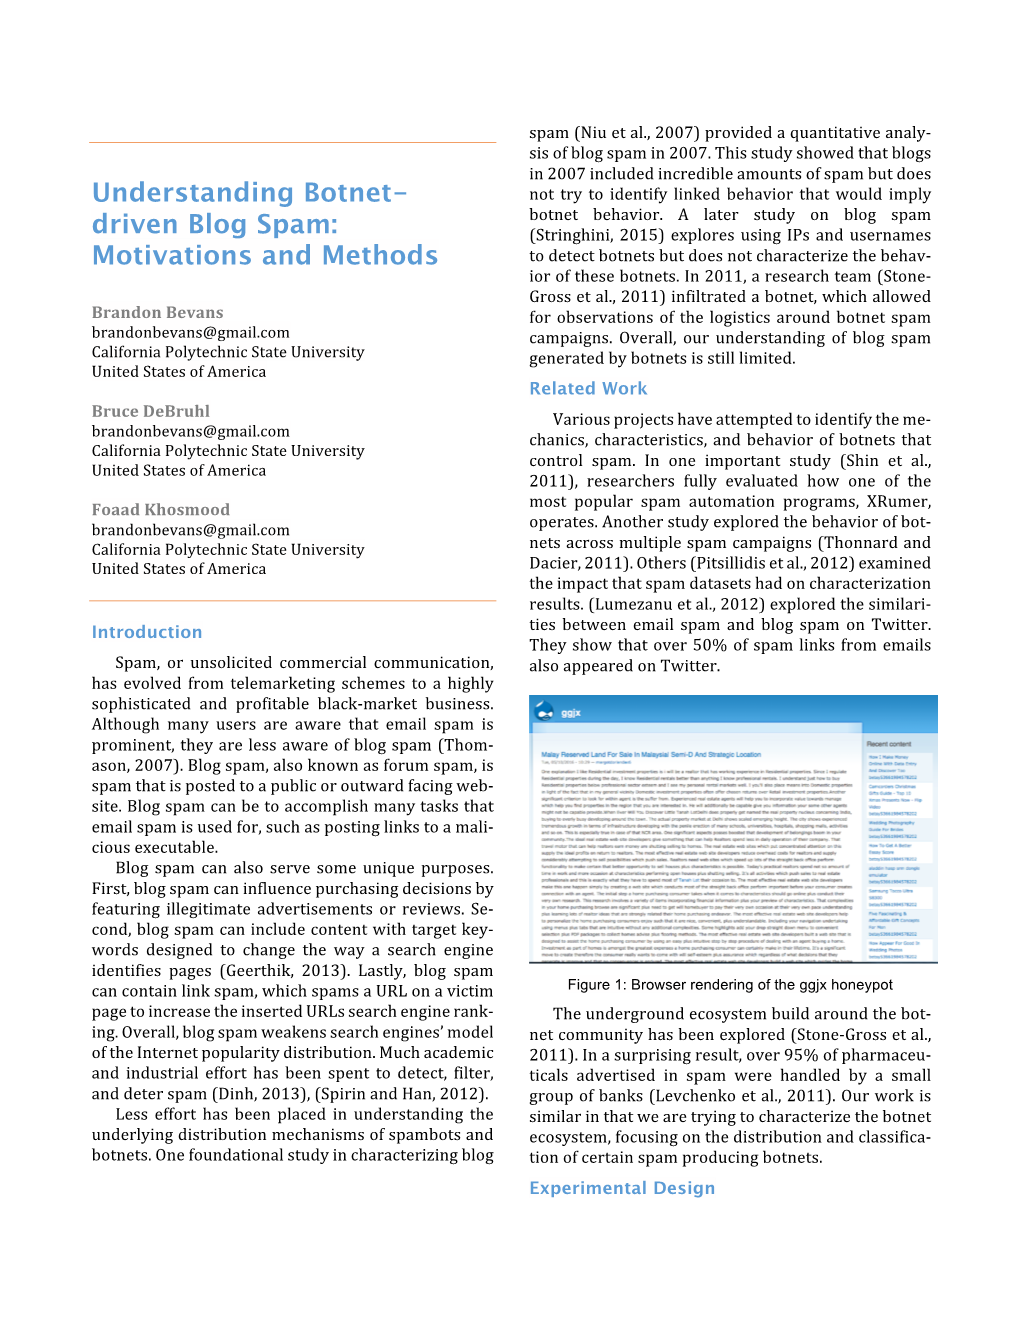 Understanding Botnet- Driven Blog Spam: Motivations and Methods